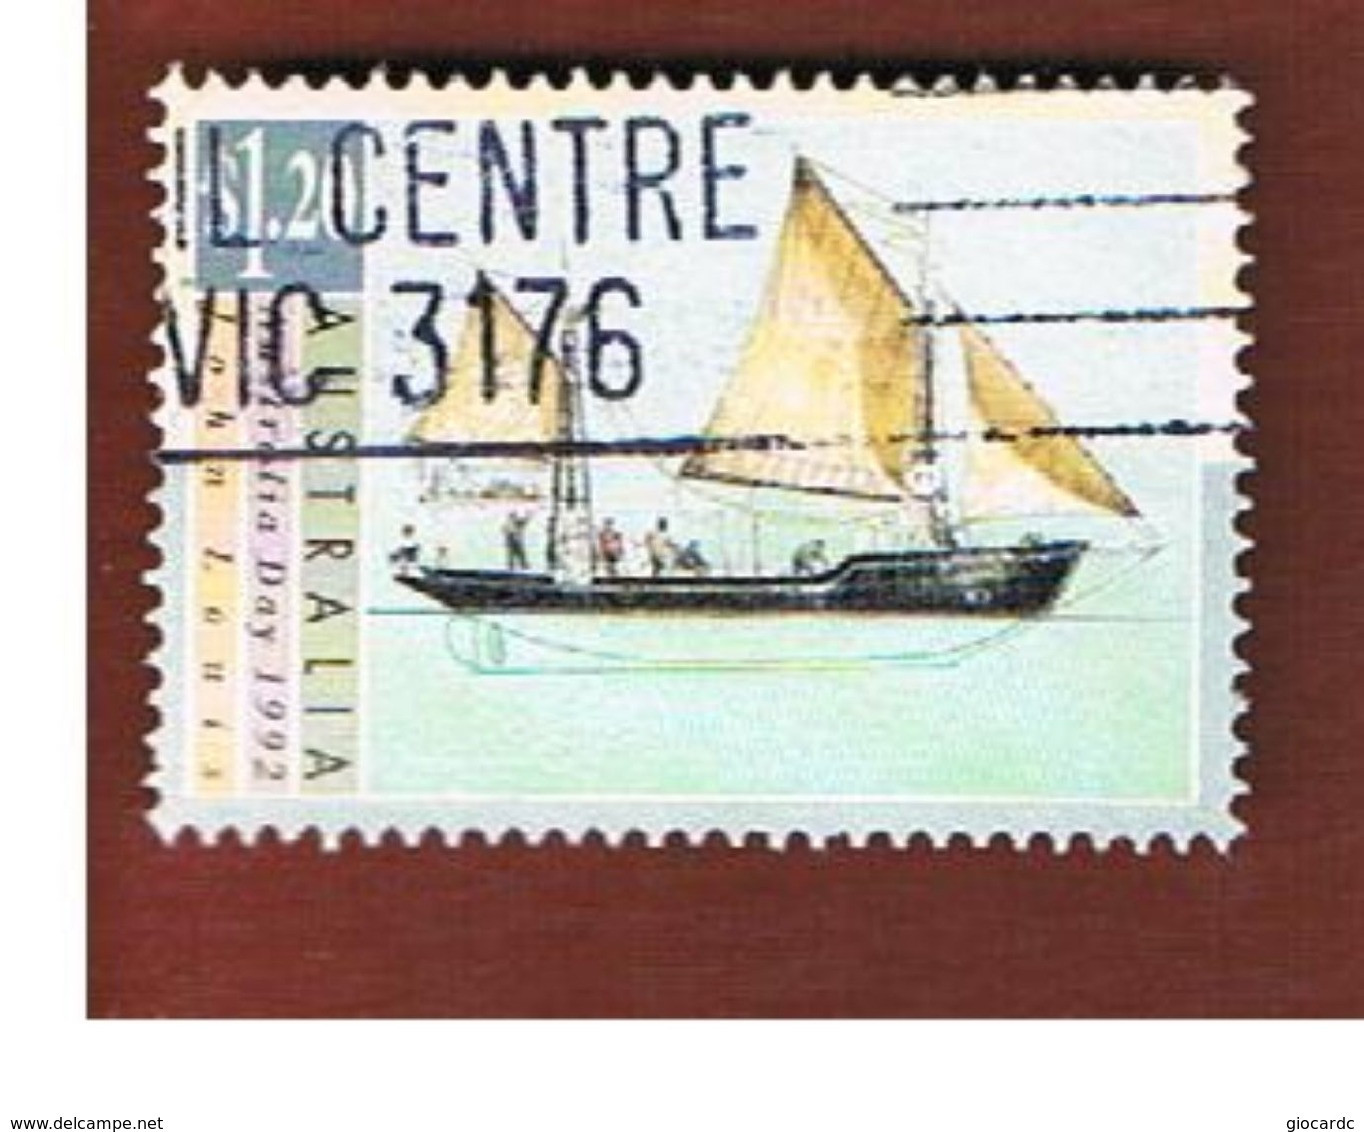 AUSTRALIA  -  SG 1336  -      1992 SHIPS: J. LUIS        -       USED - Gebruikt